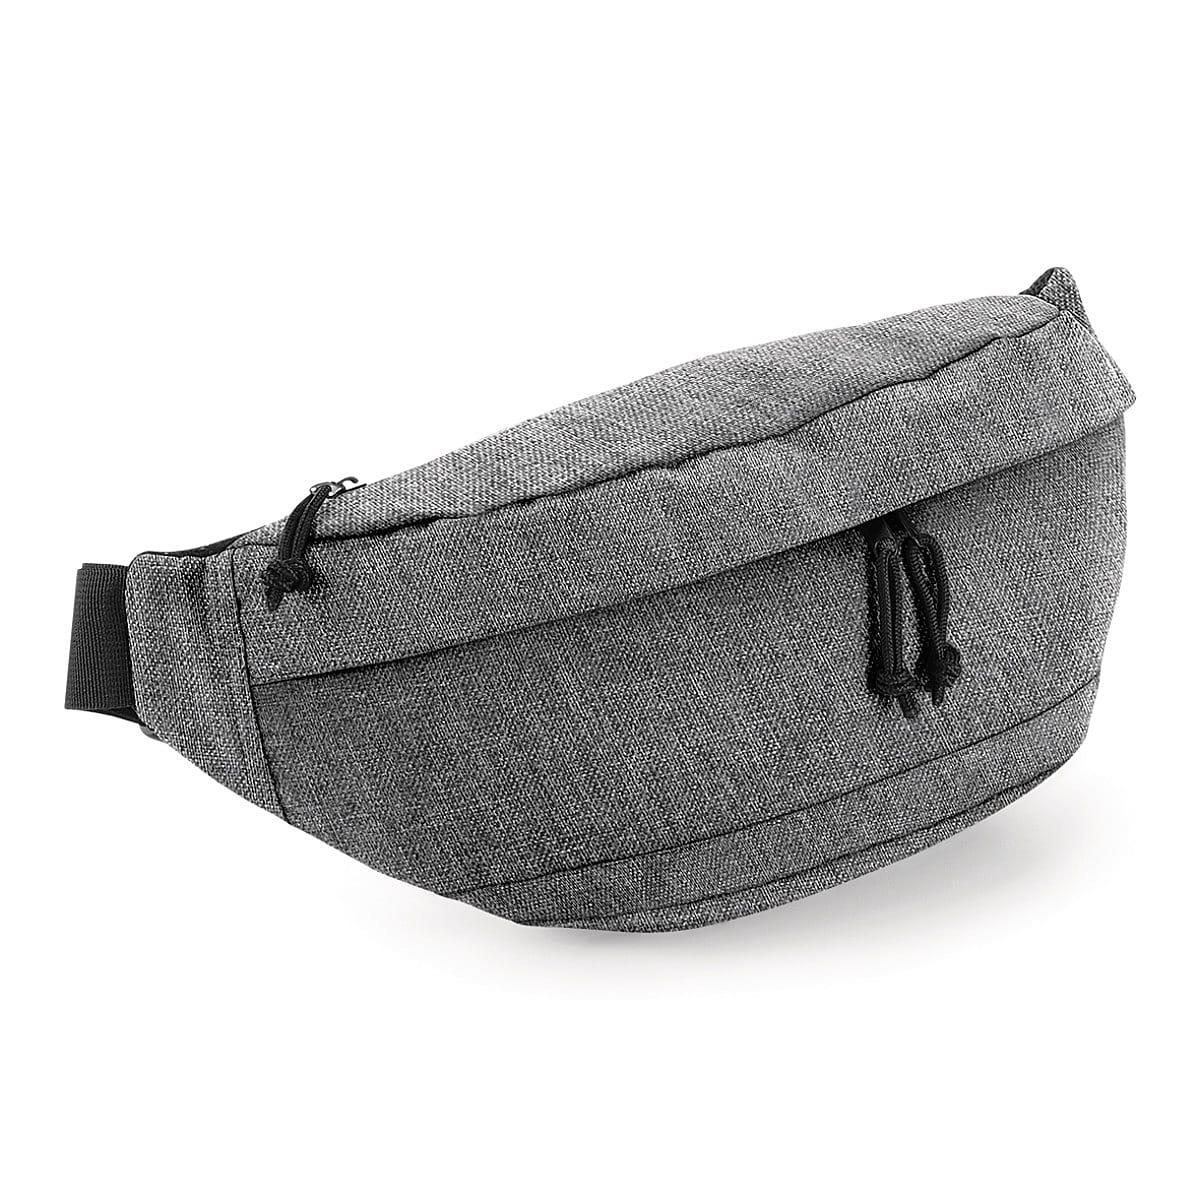 Bagbase Oversized Across Body Bag in Grey Marl (Product Code: BG143)